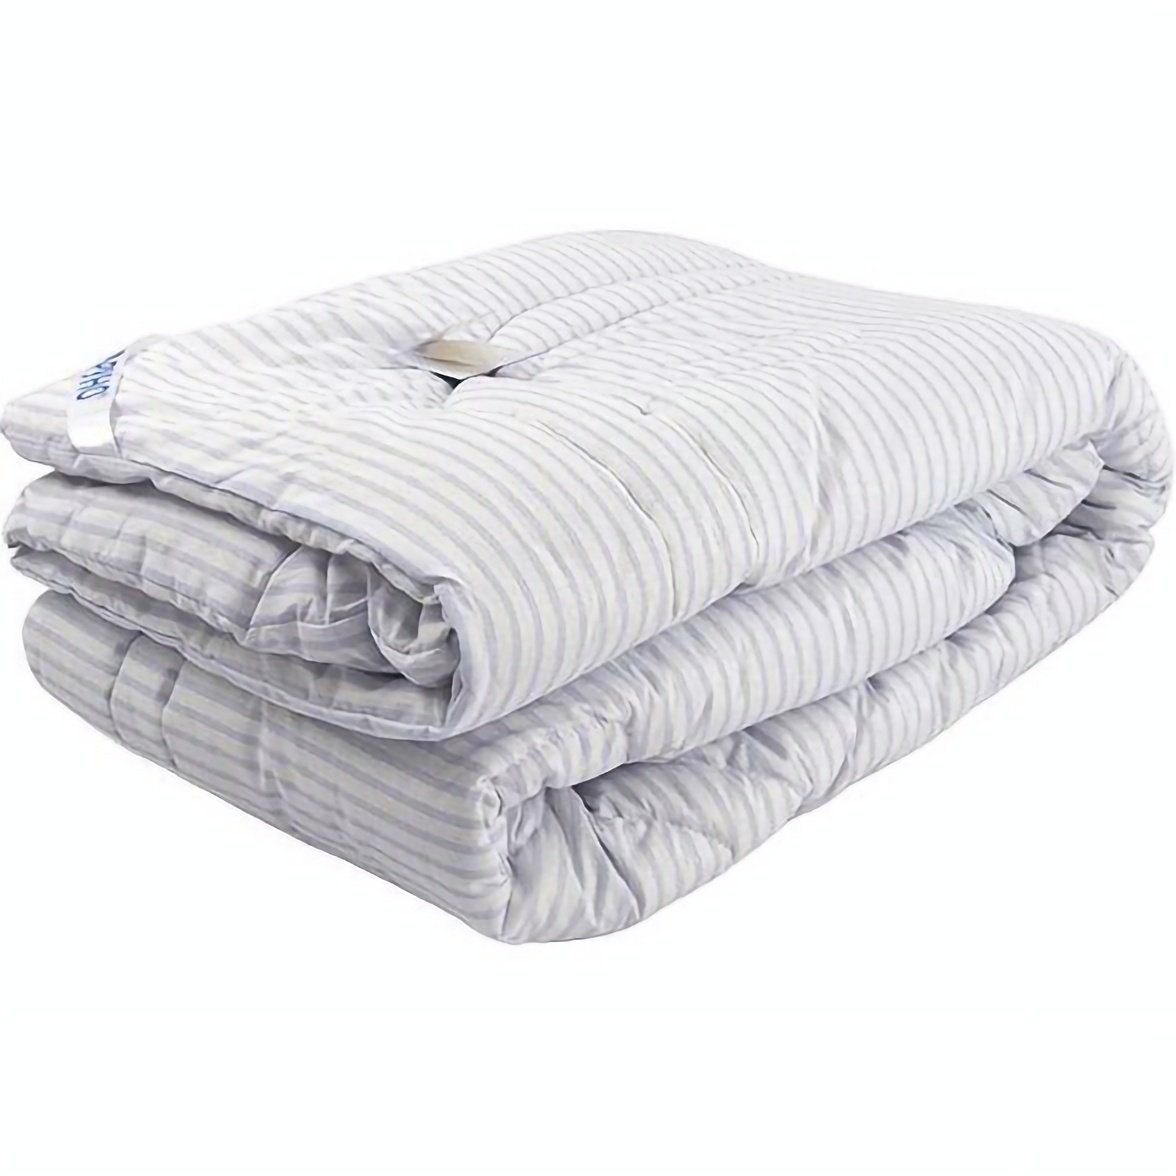 Одеяло шерстяное Руно Blue stripes, полуторное, бязь, 205х140 см, голубое (321.02ШУ_Blue stripes) - фото 1